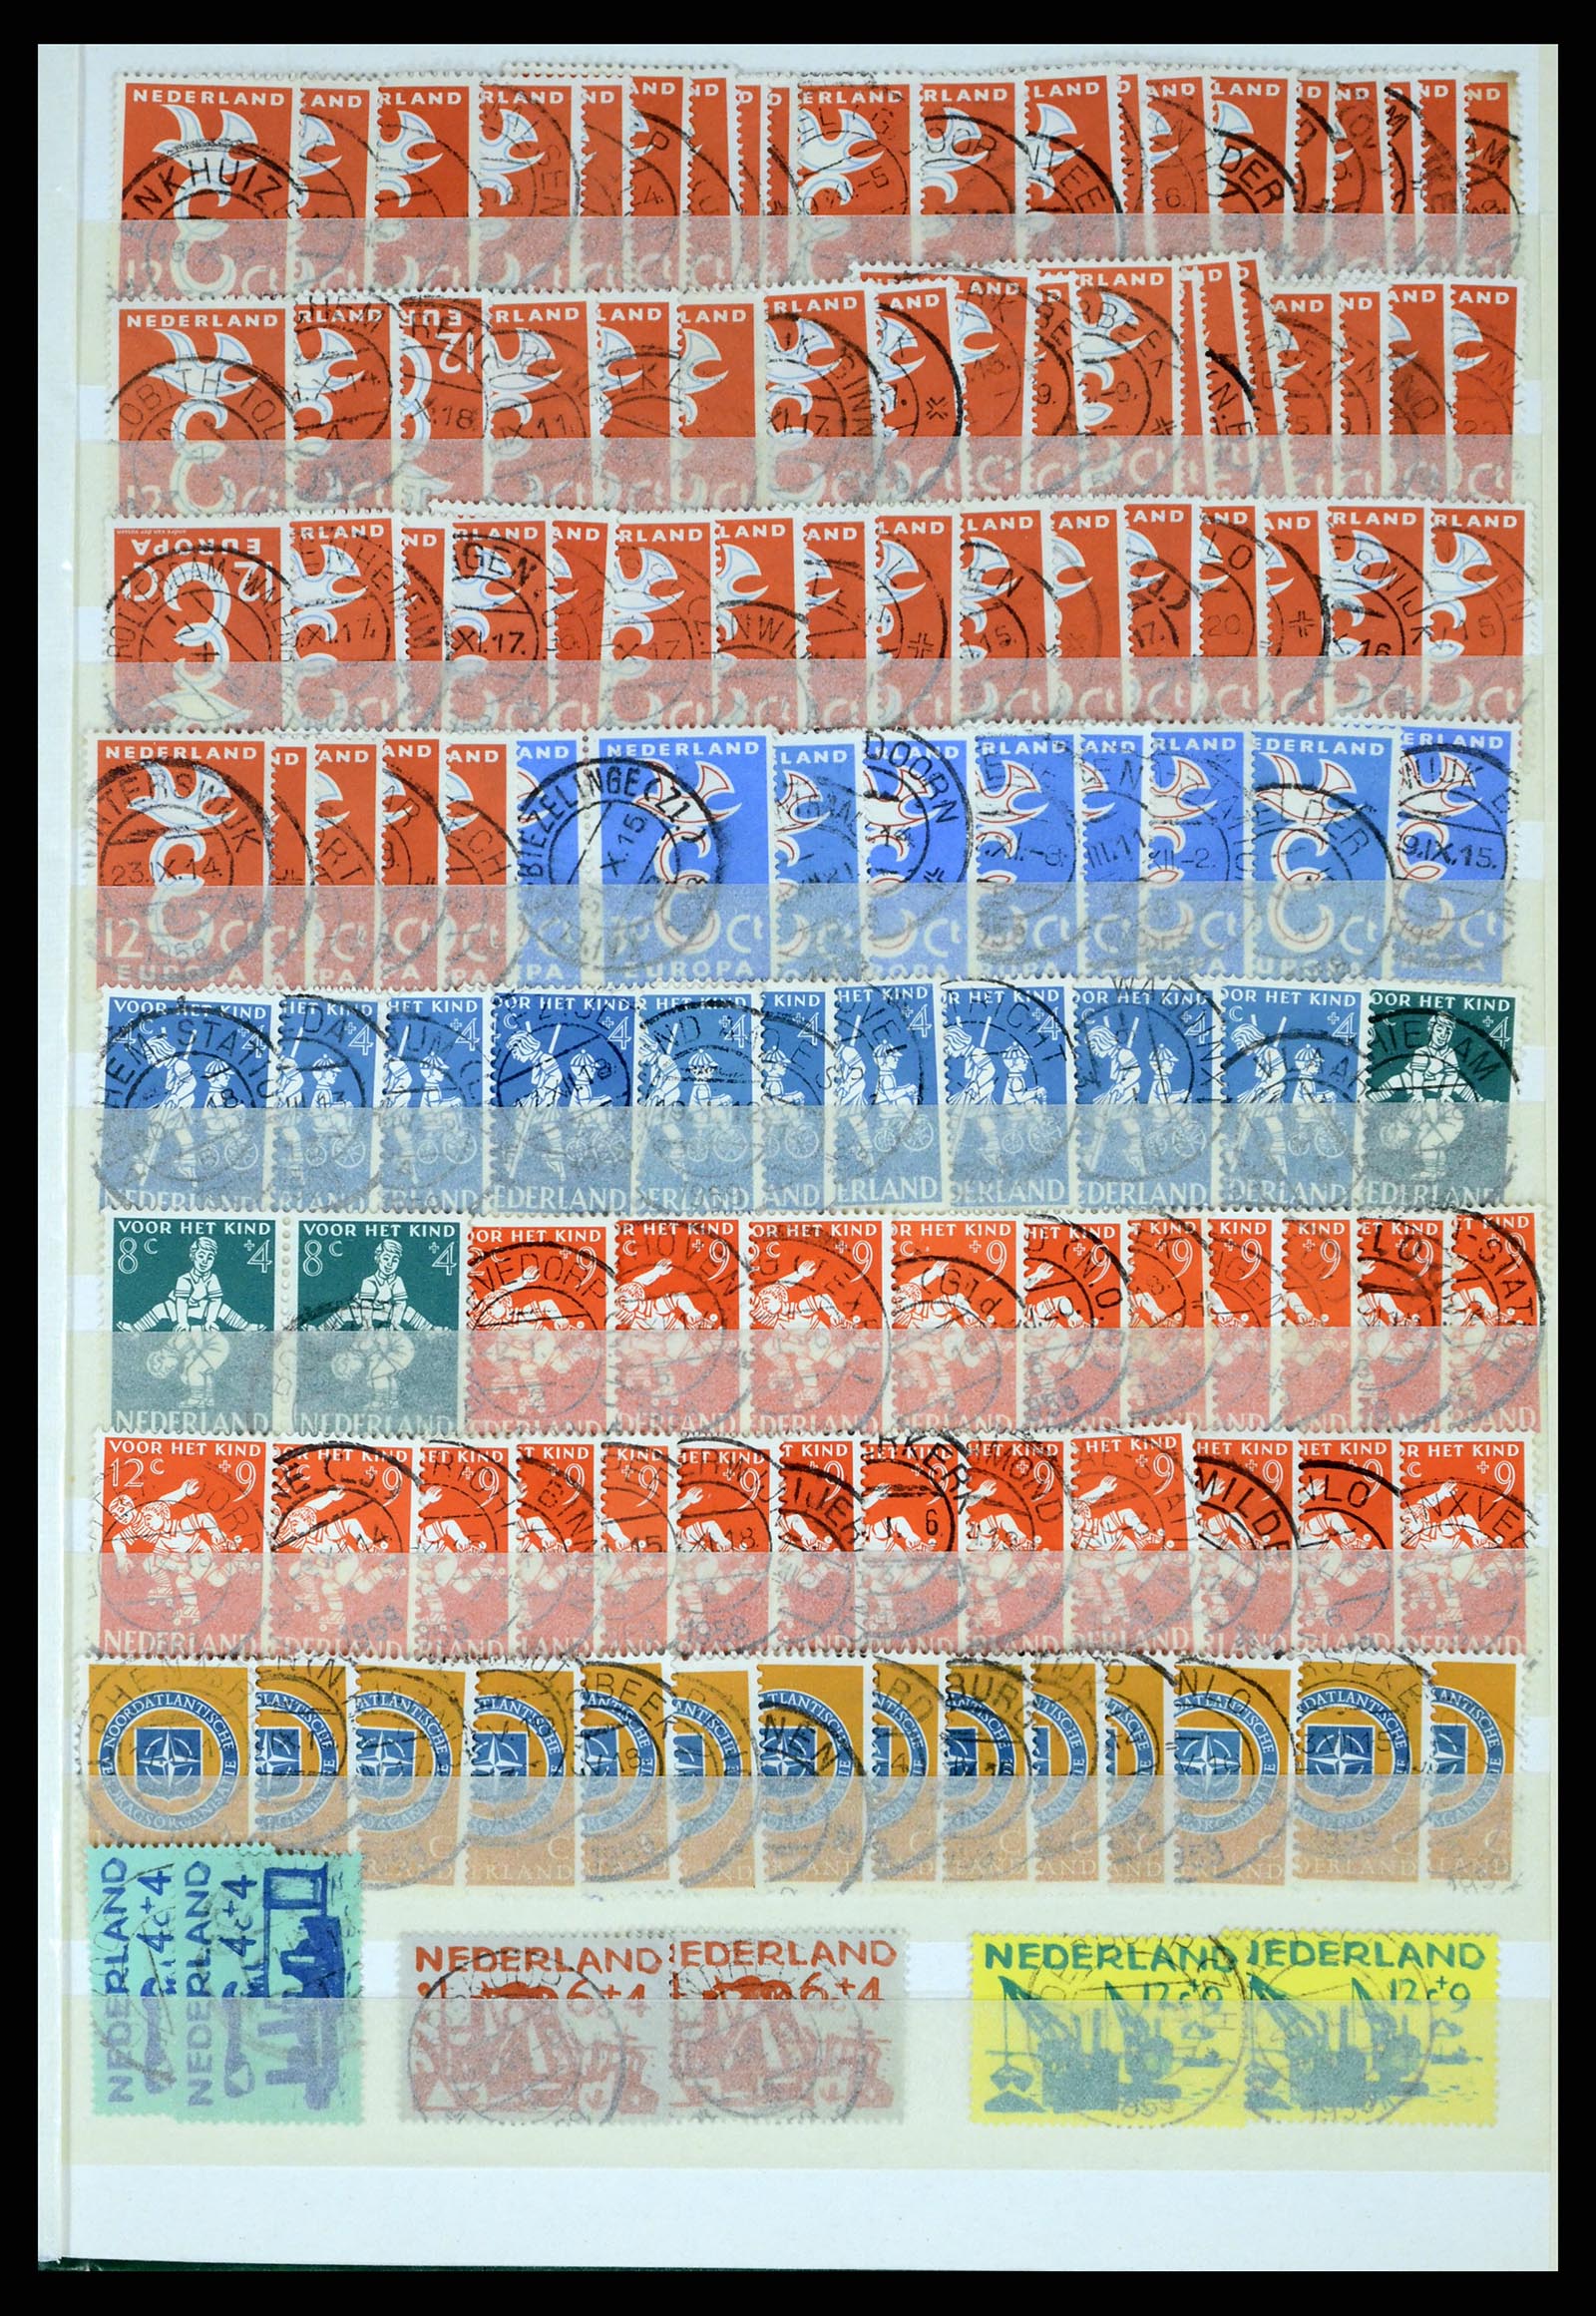 37424 053 - Stamp collection 37424 Netherlands shortbar cancels.